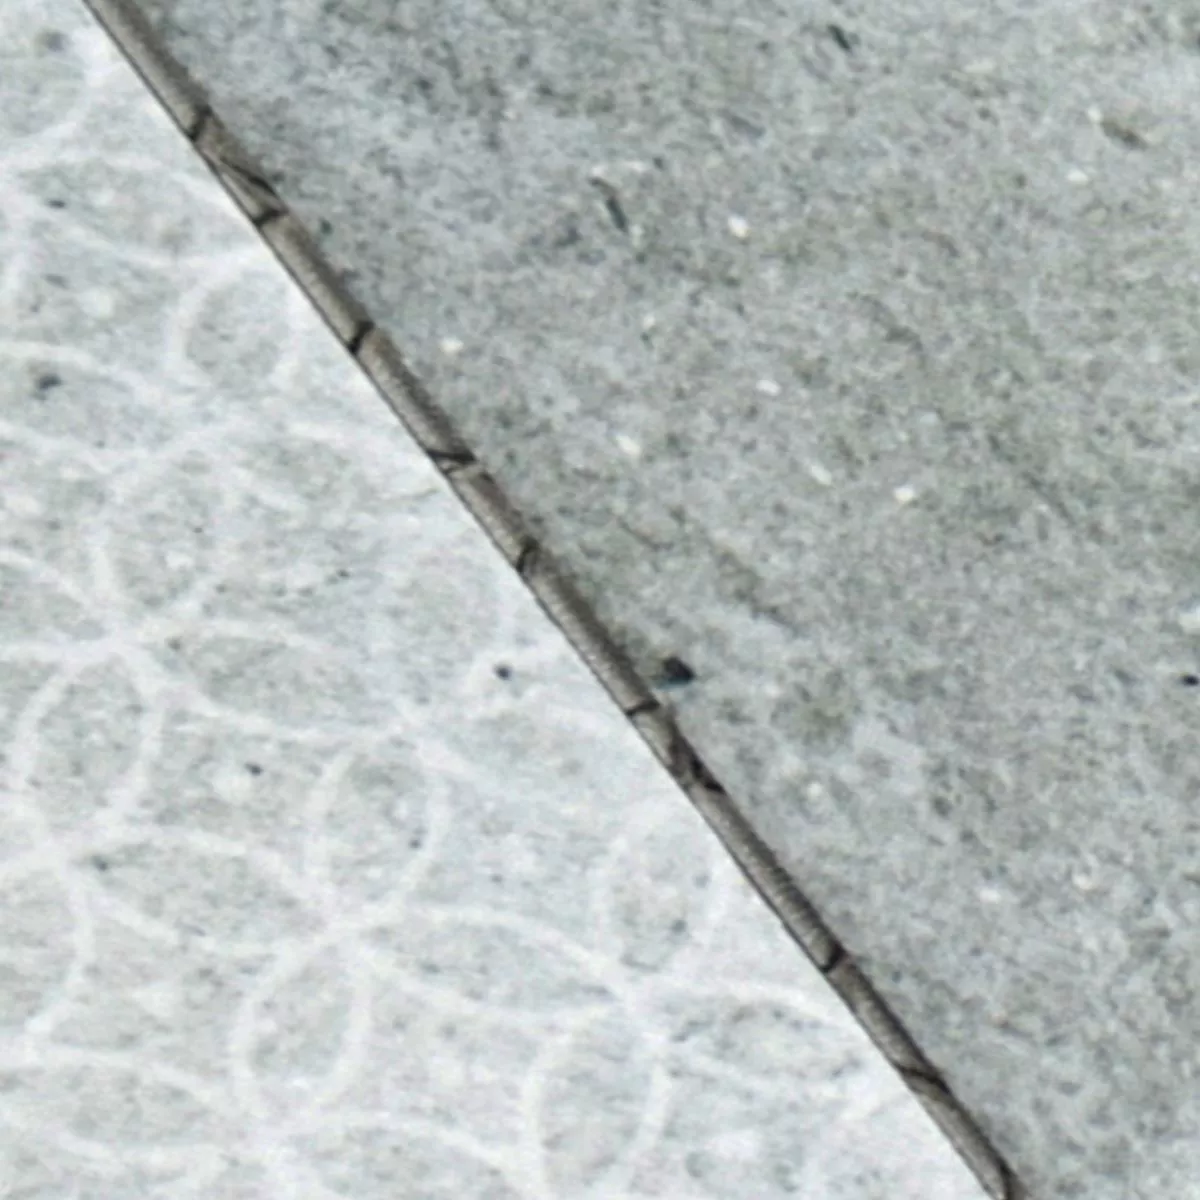 Sample Ceramic Mosaic Tiles Campeche Cement Optic Grey